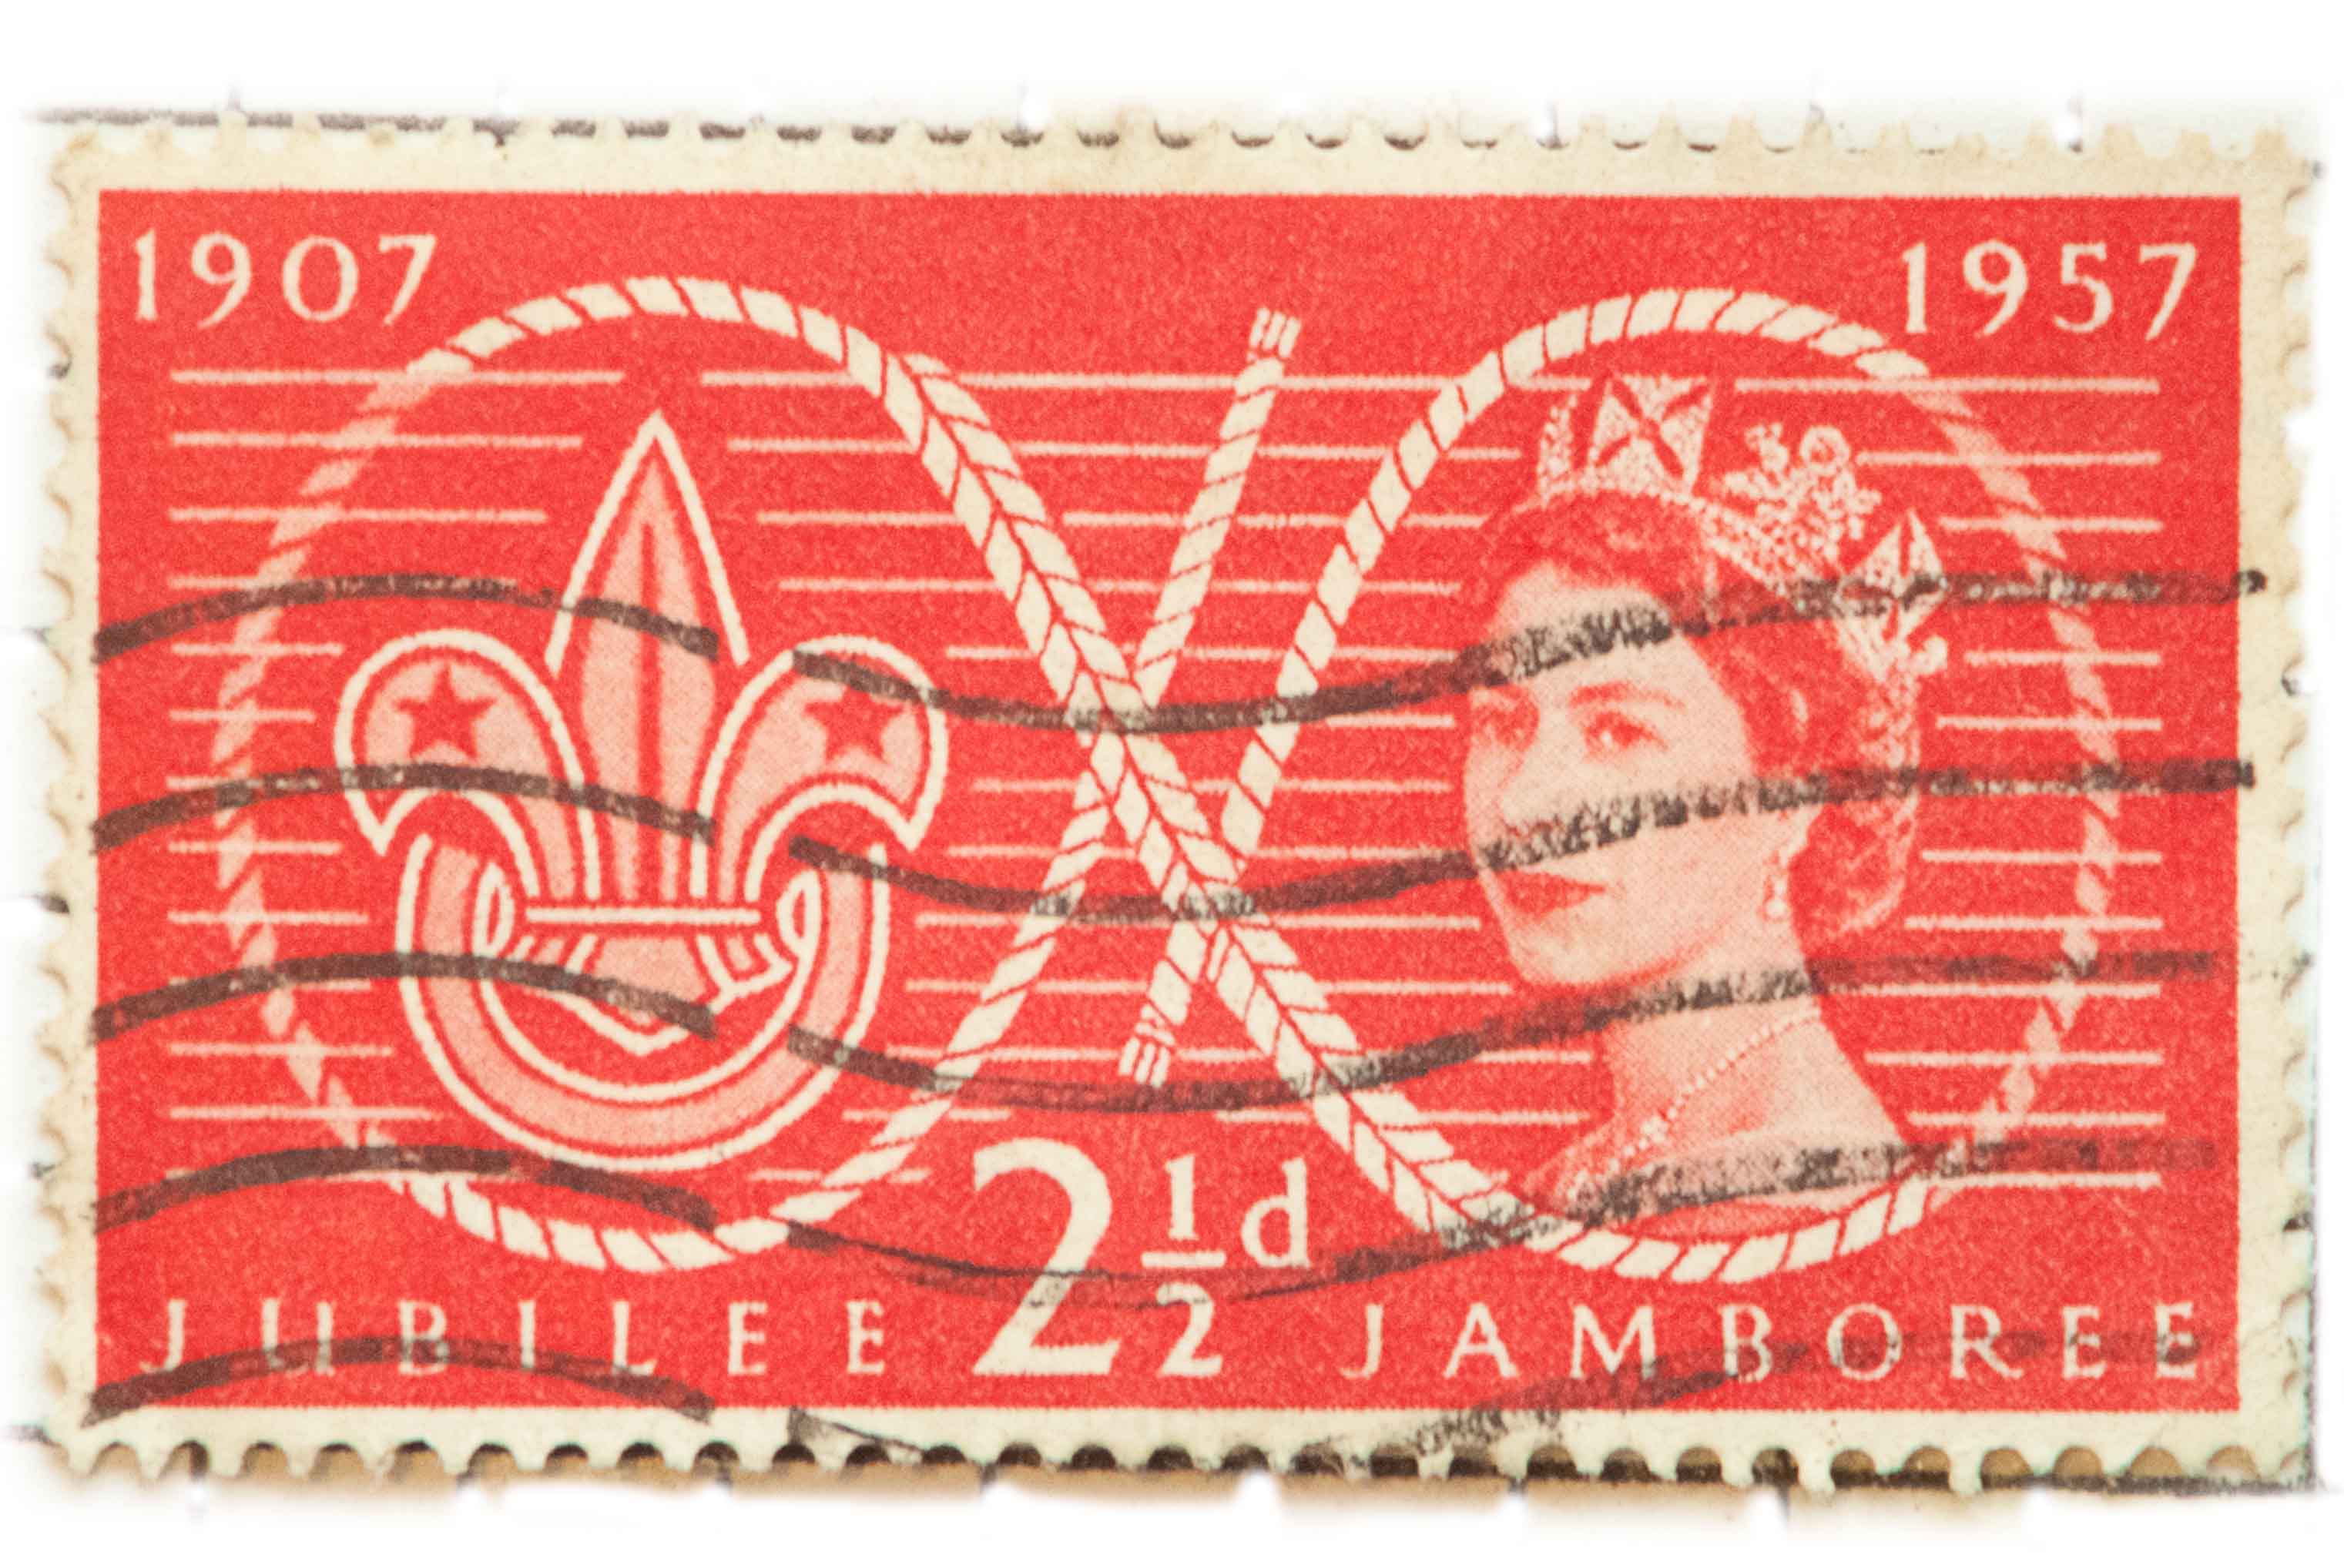 Old British Stamps - takemephoto